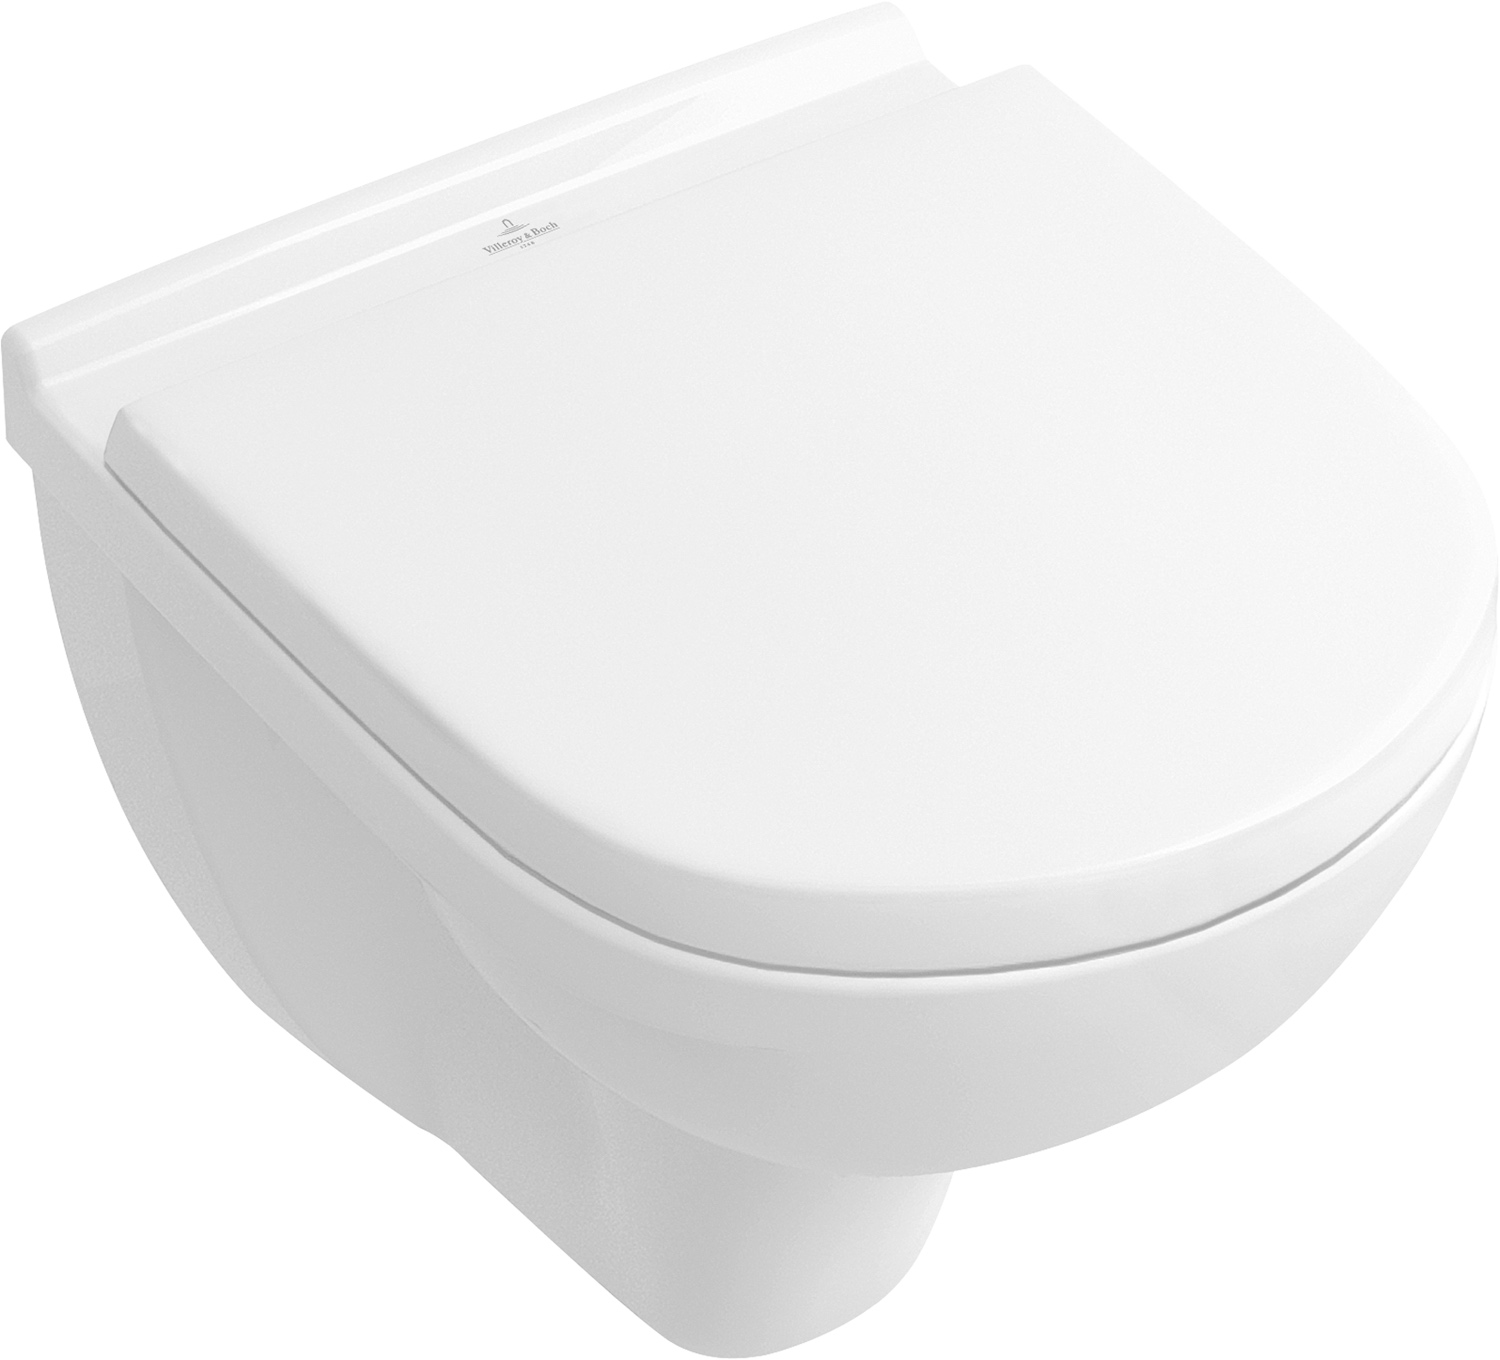 Tiefspül-WC Compact spülrandlos O.novo 5688R0, 360 x 490 x 350 mm, Oval, wandhängend, Abgang waagerecht, Weiß Alpin